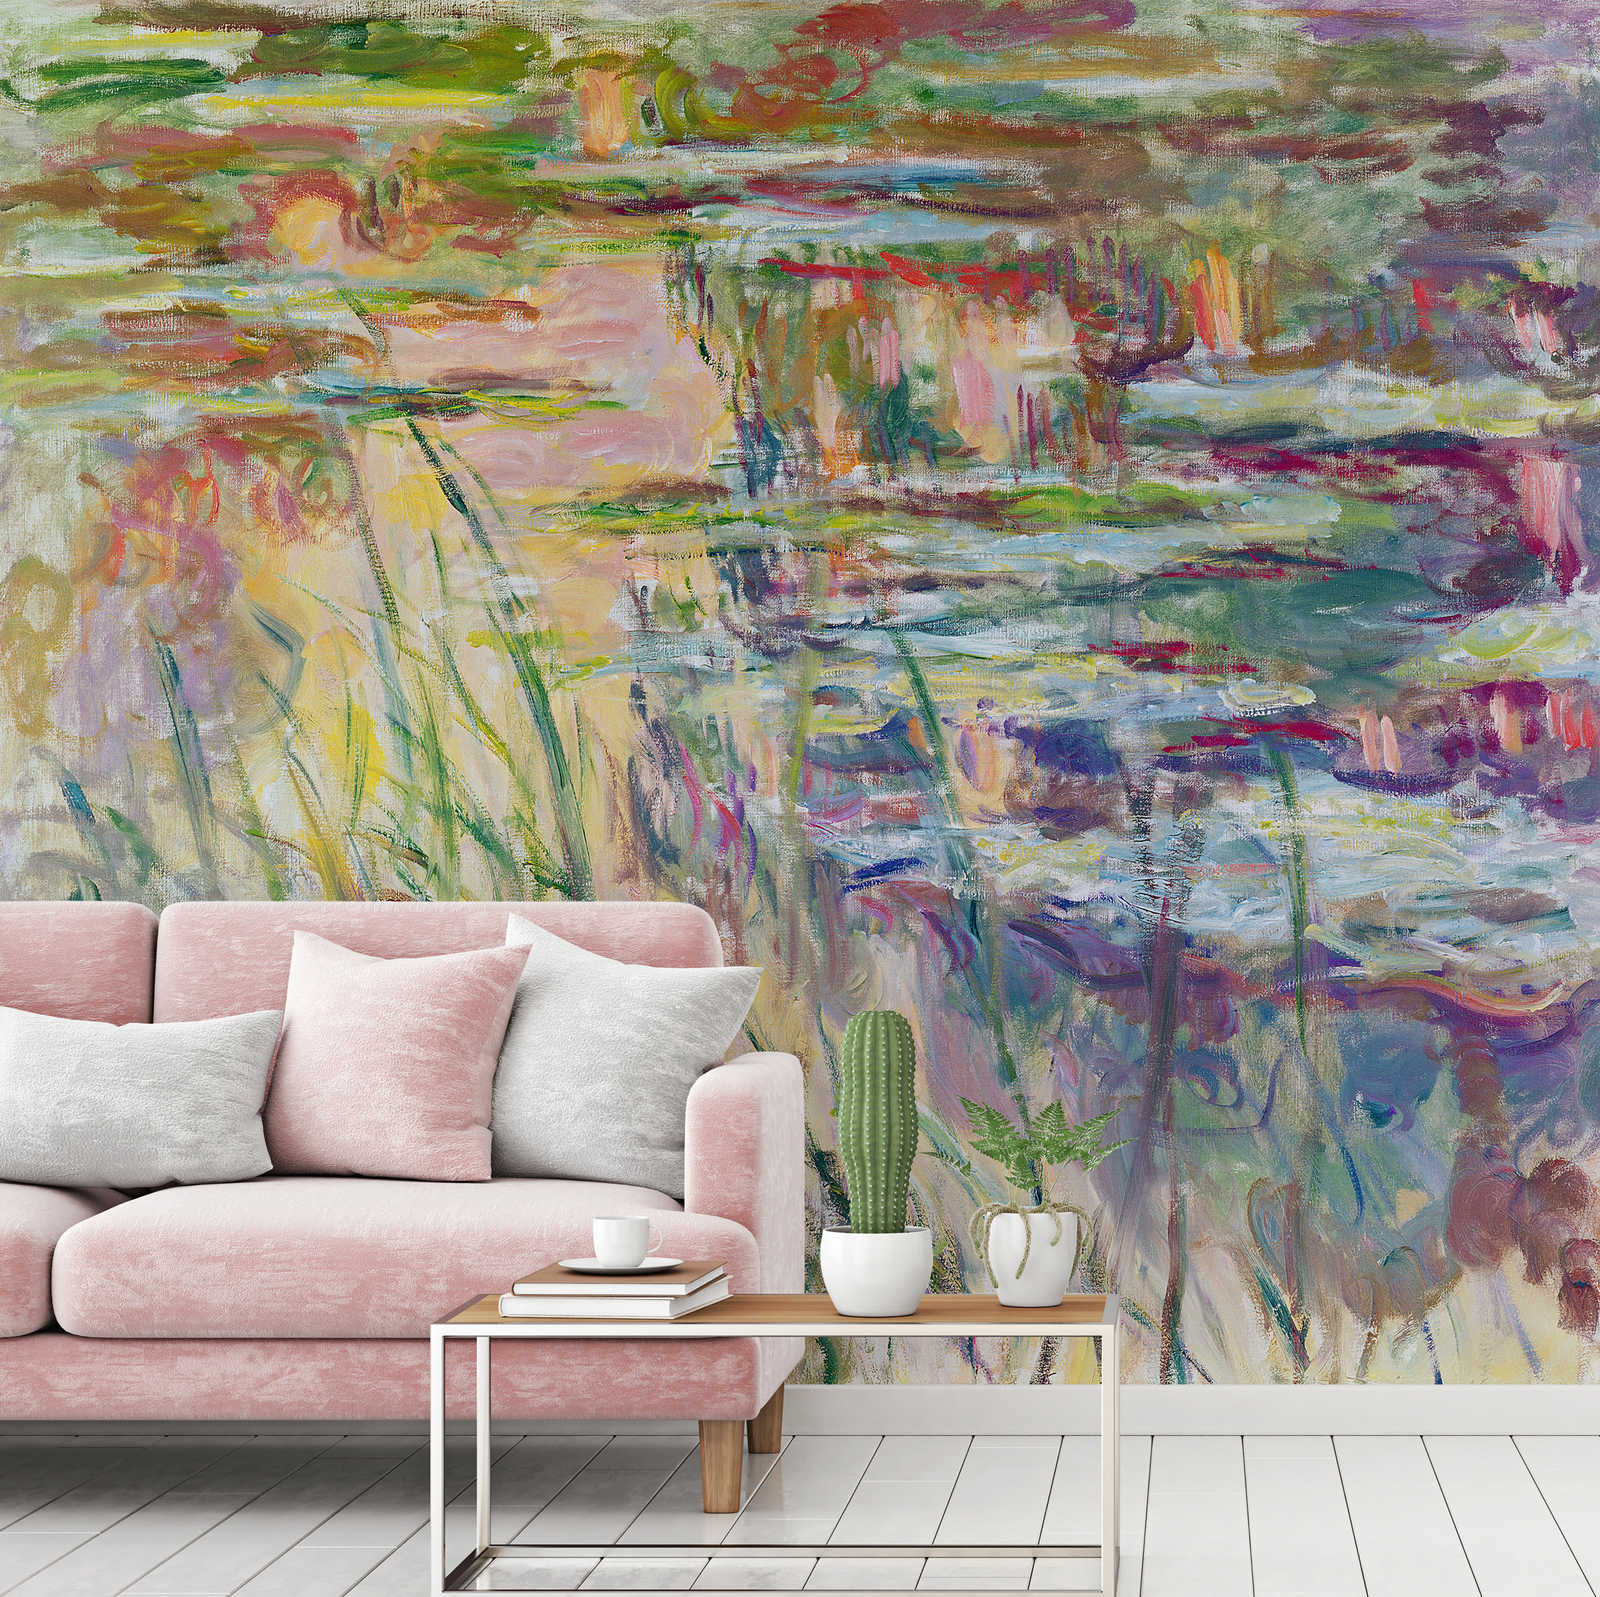             Fotomurali "Riflessi sull'acqua" di Claude Monet
        